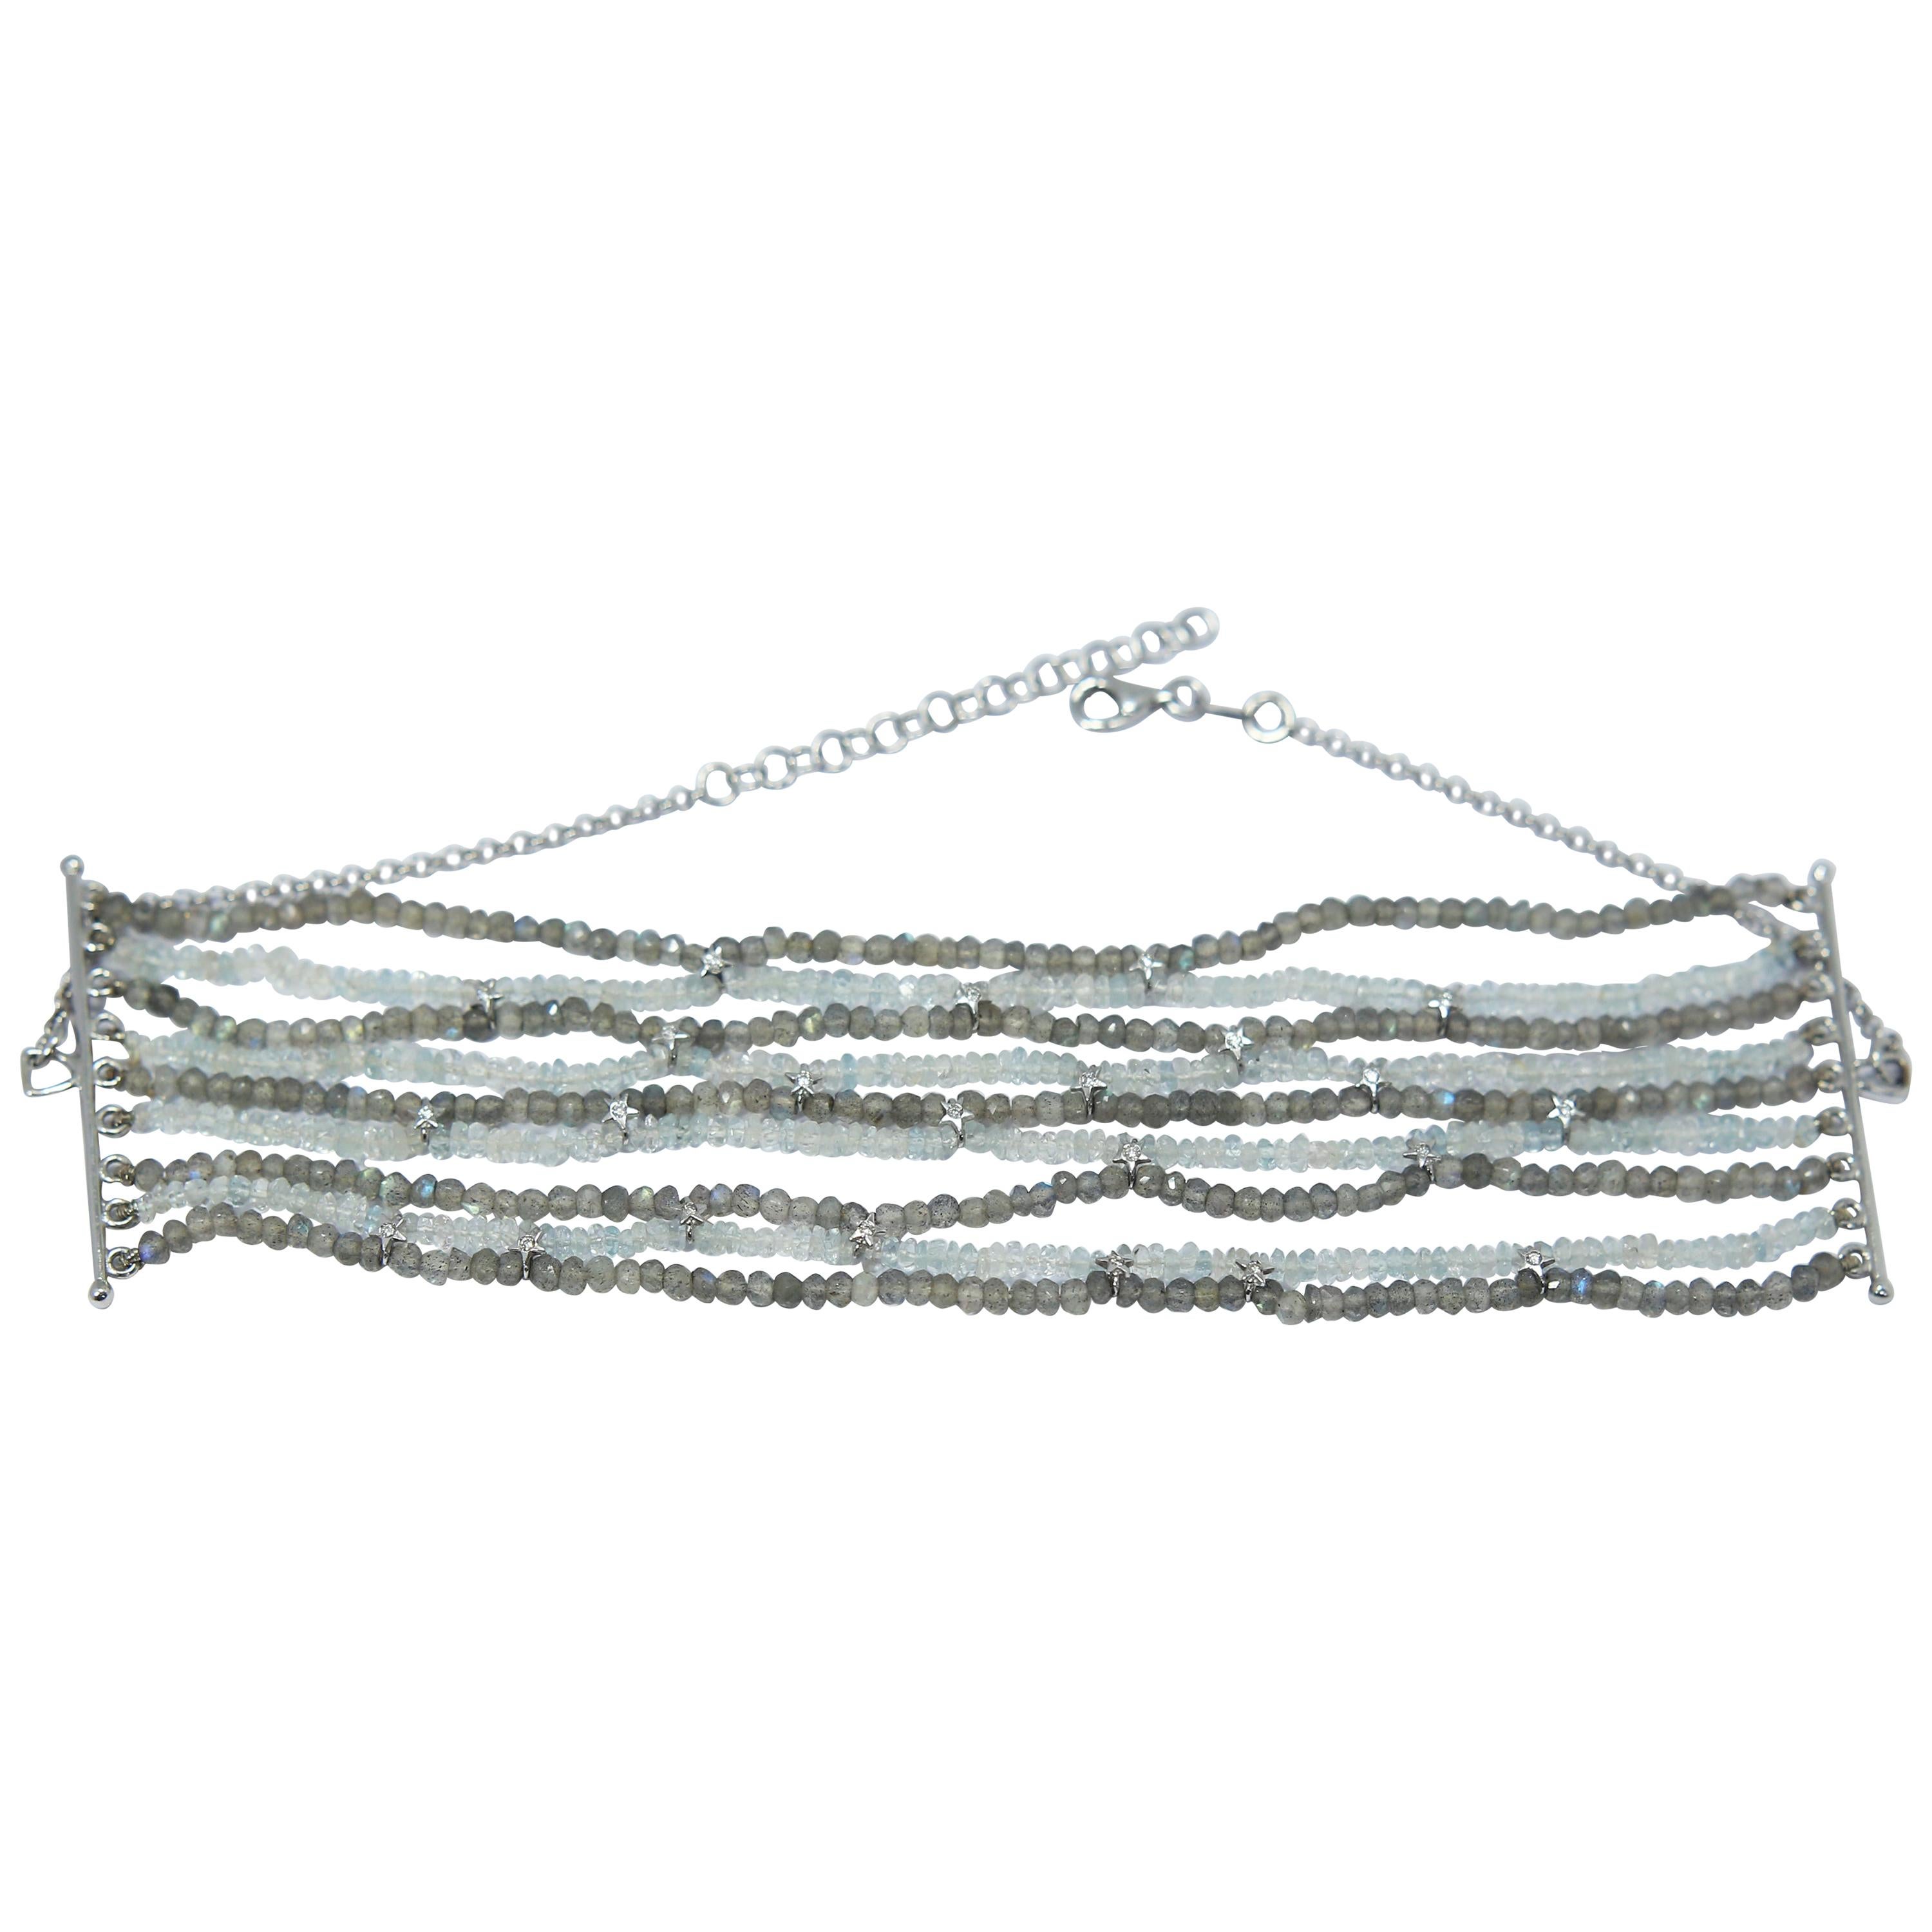 Diamond Star Choker Necklace of 18 Karat Gold Labradorite and Moonstone Beads